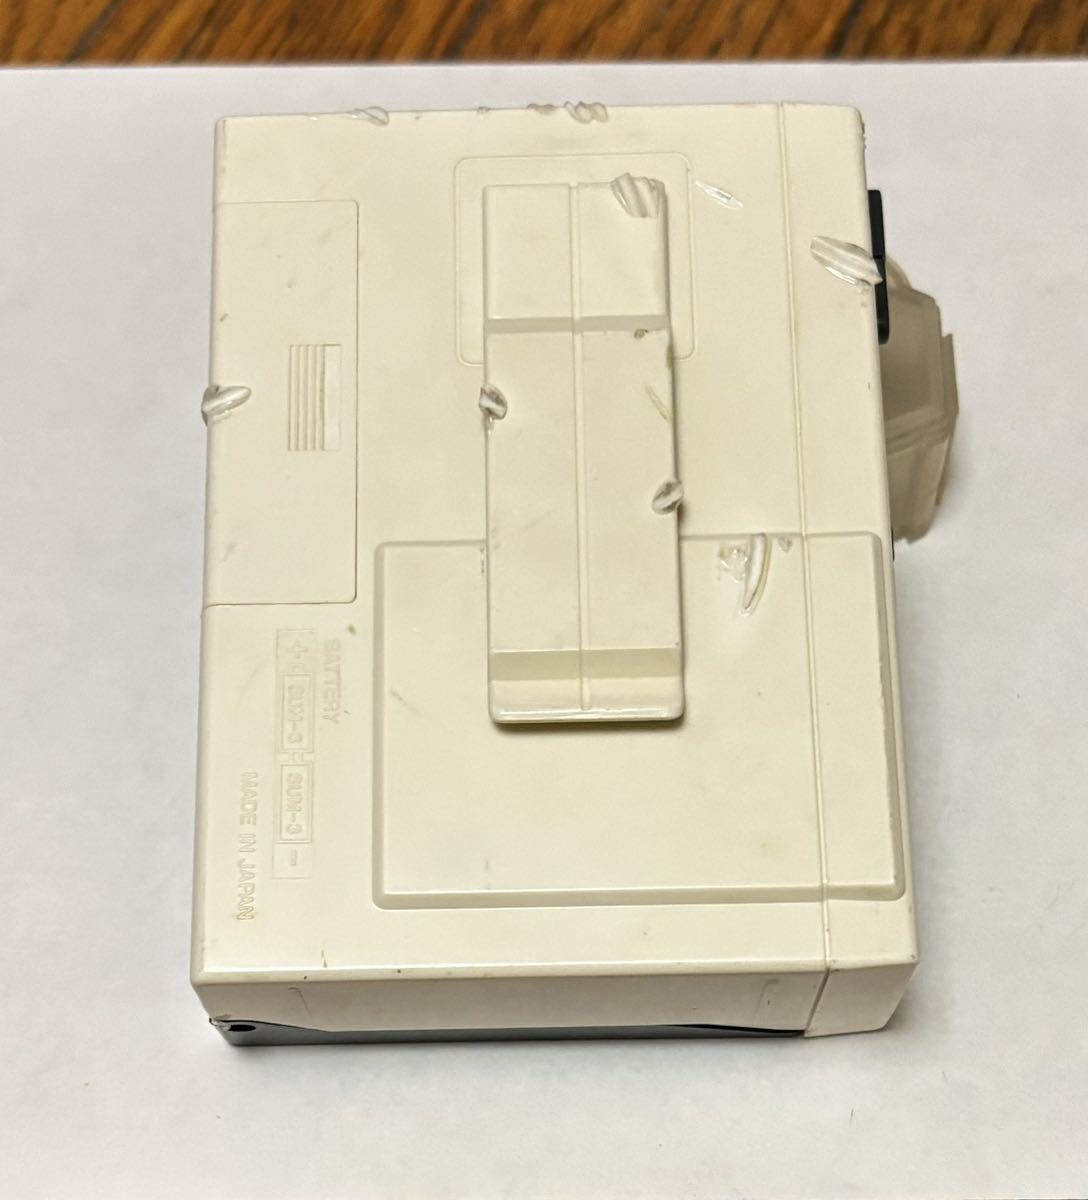 SHINAON MG-600 カセットテーププレーヤー 中古。付属品無し。動作確認していません。 現状品。本体のみ。_画像2